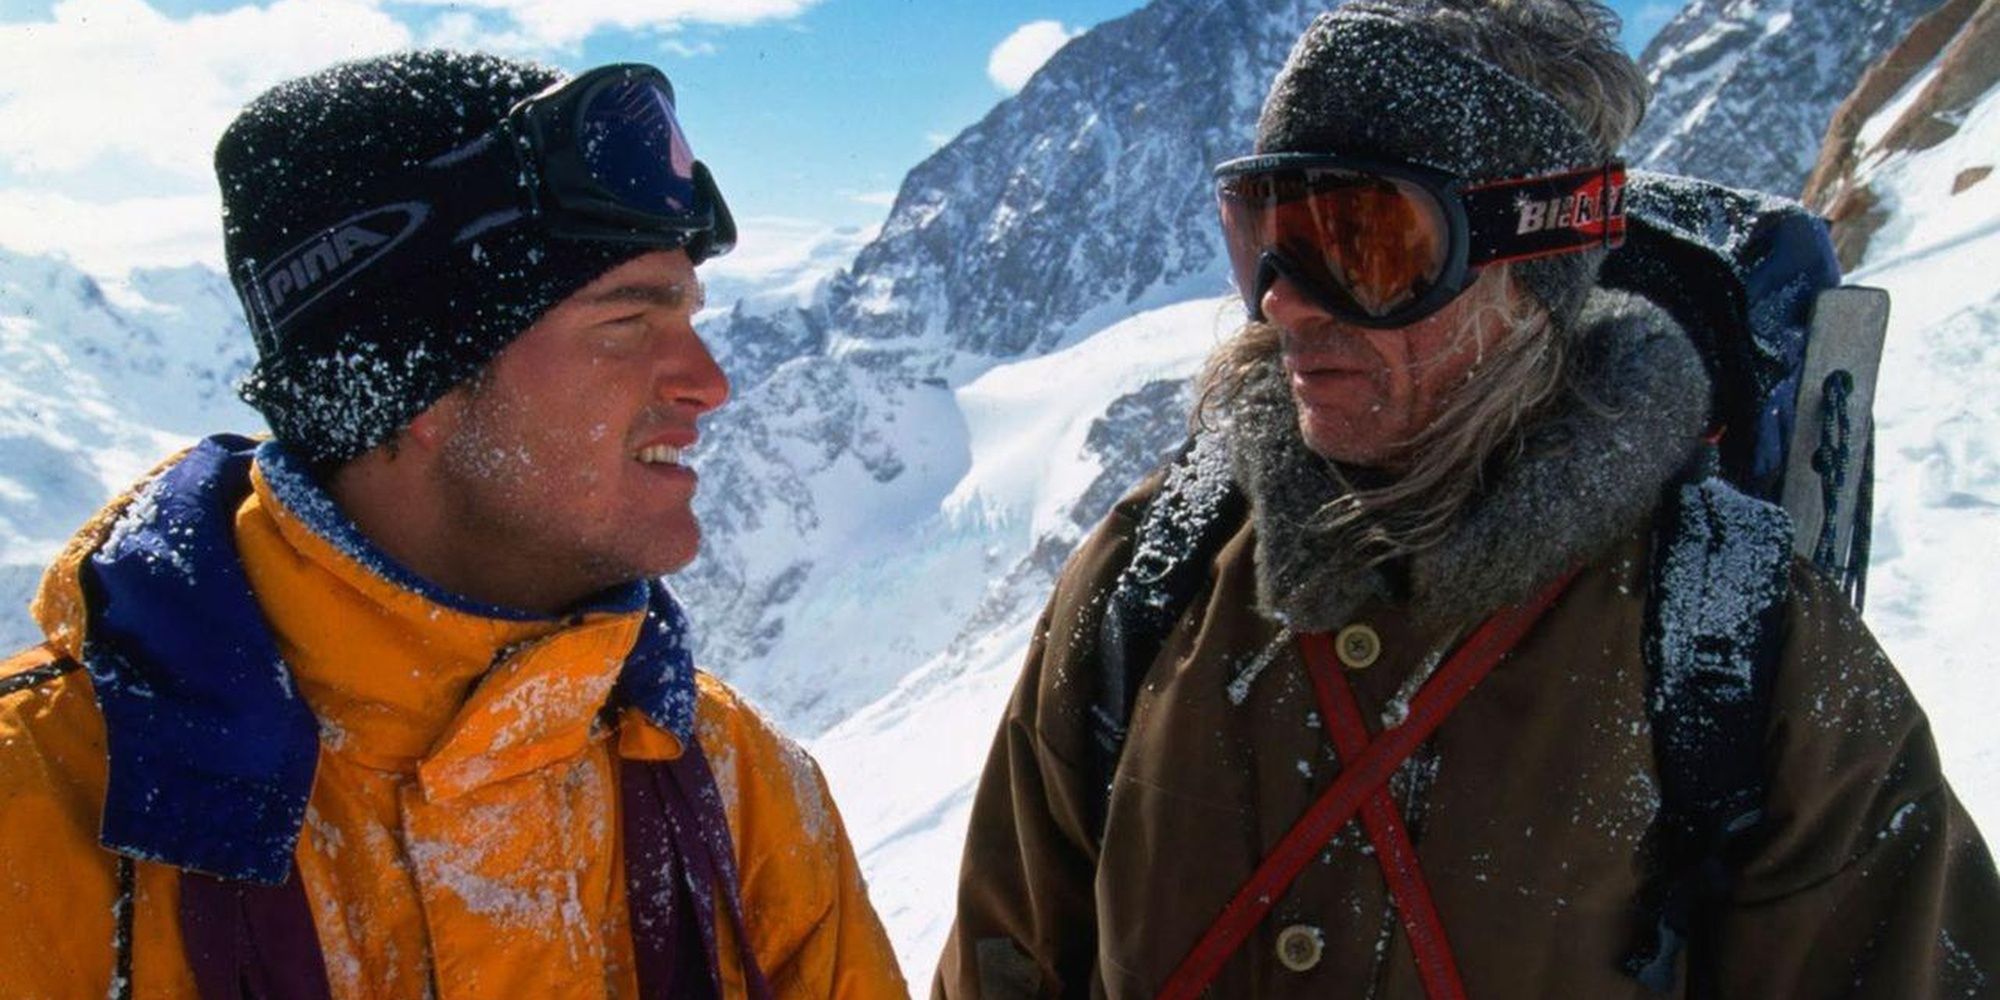 Two men conversing on a frozen mountain